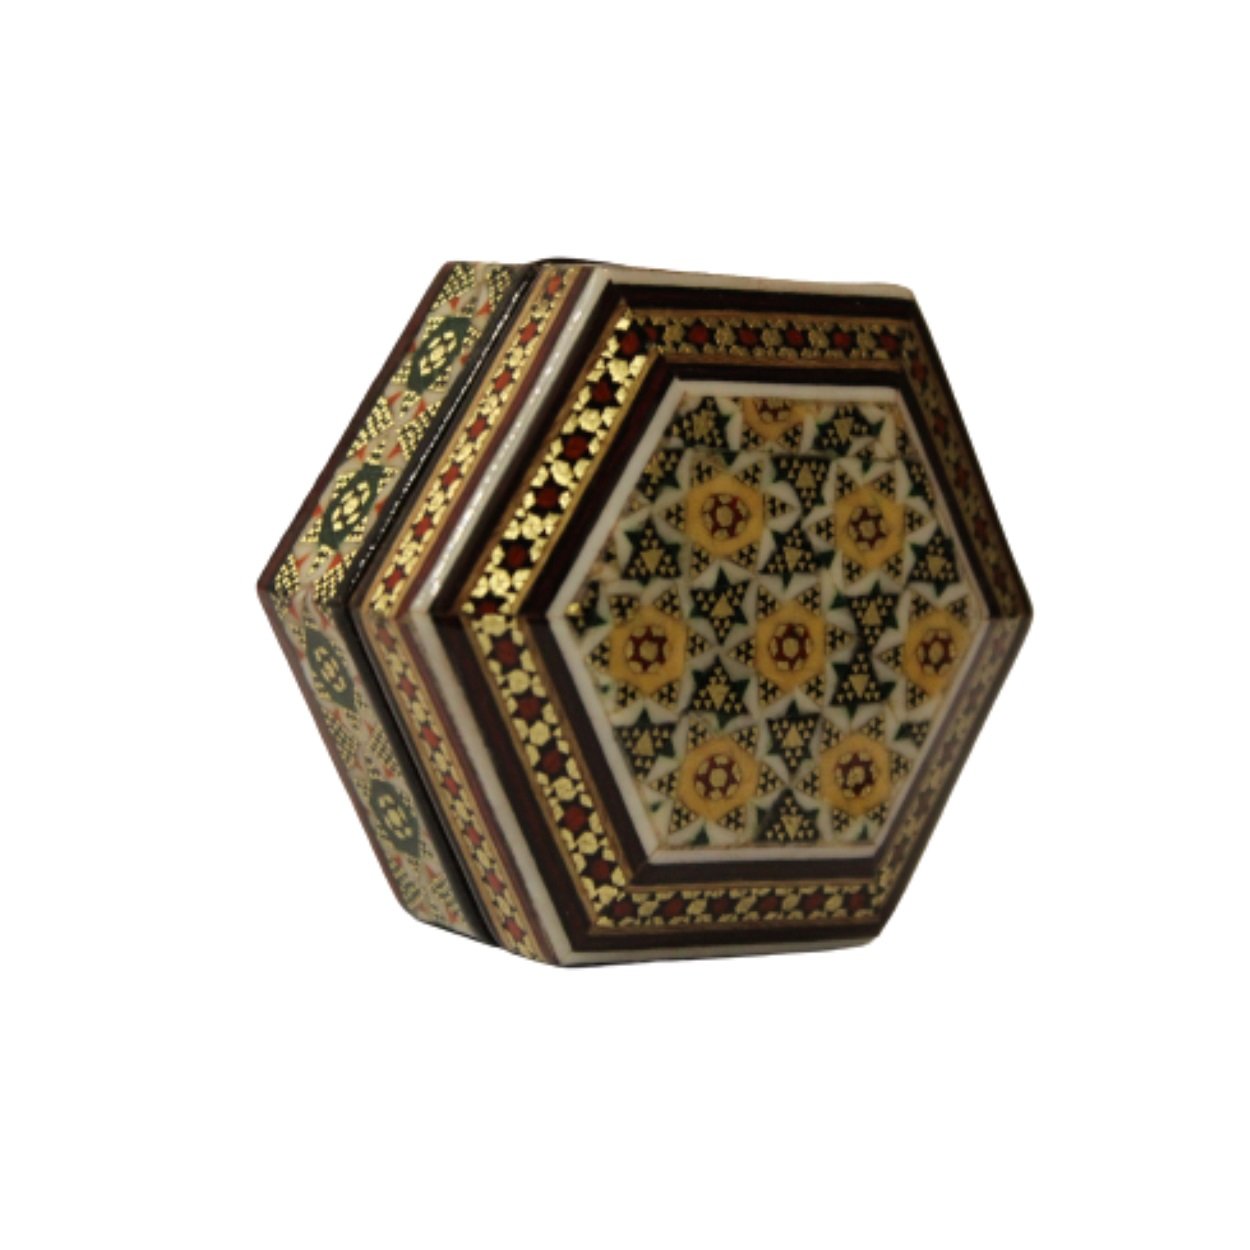 Khatam Jewelry box Model Eslimi Code 09 , Khatam box, Inlaid, Khatam Jewelry box, Khatam